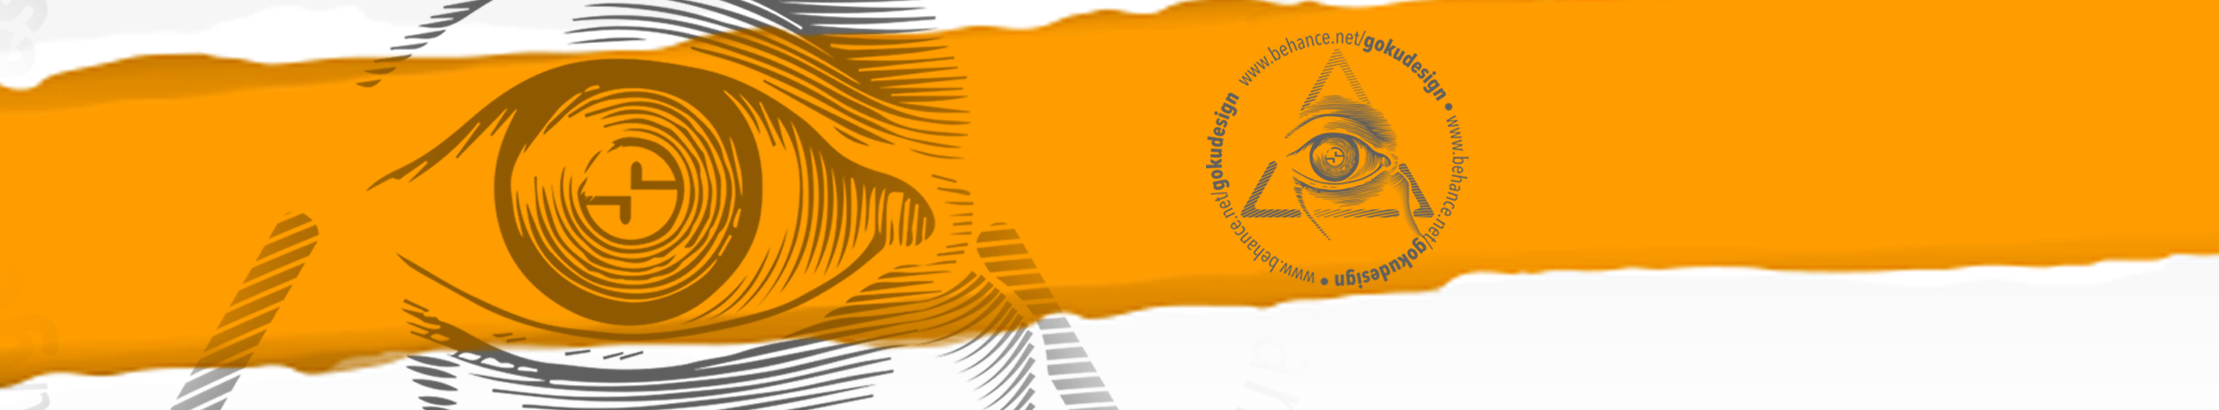 Banner de perfil de Gokú Design